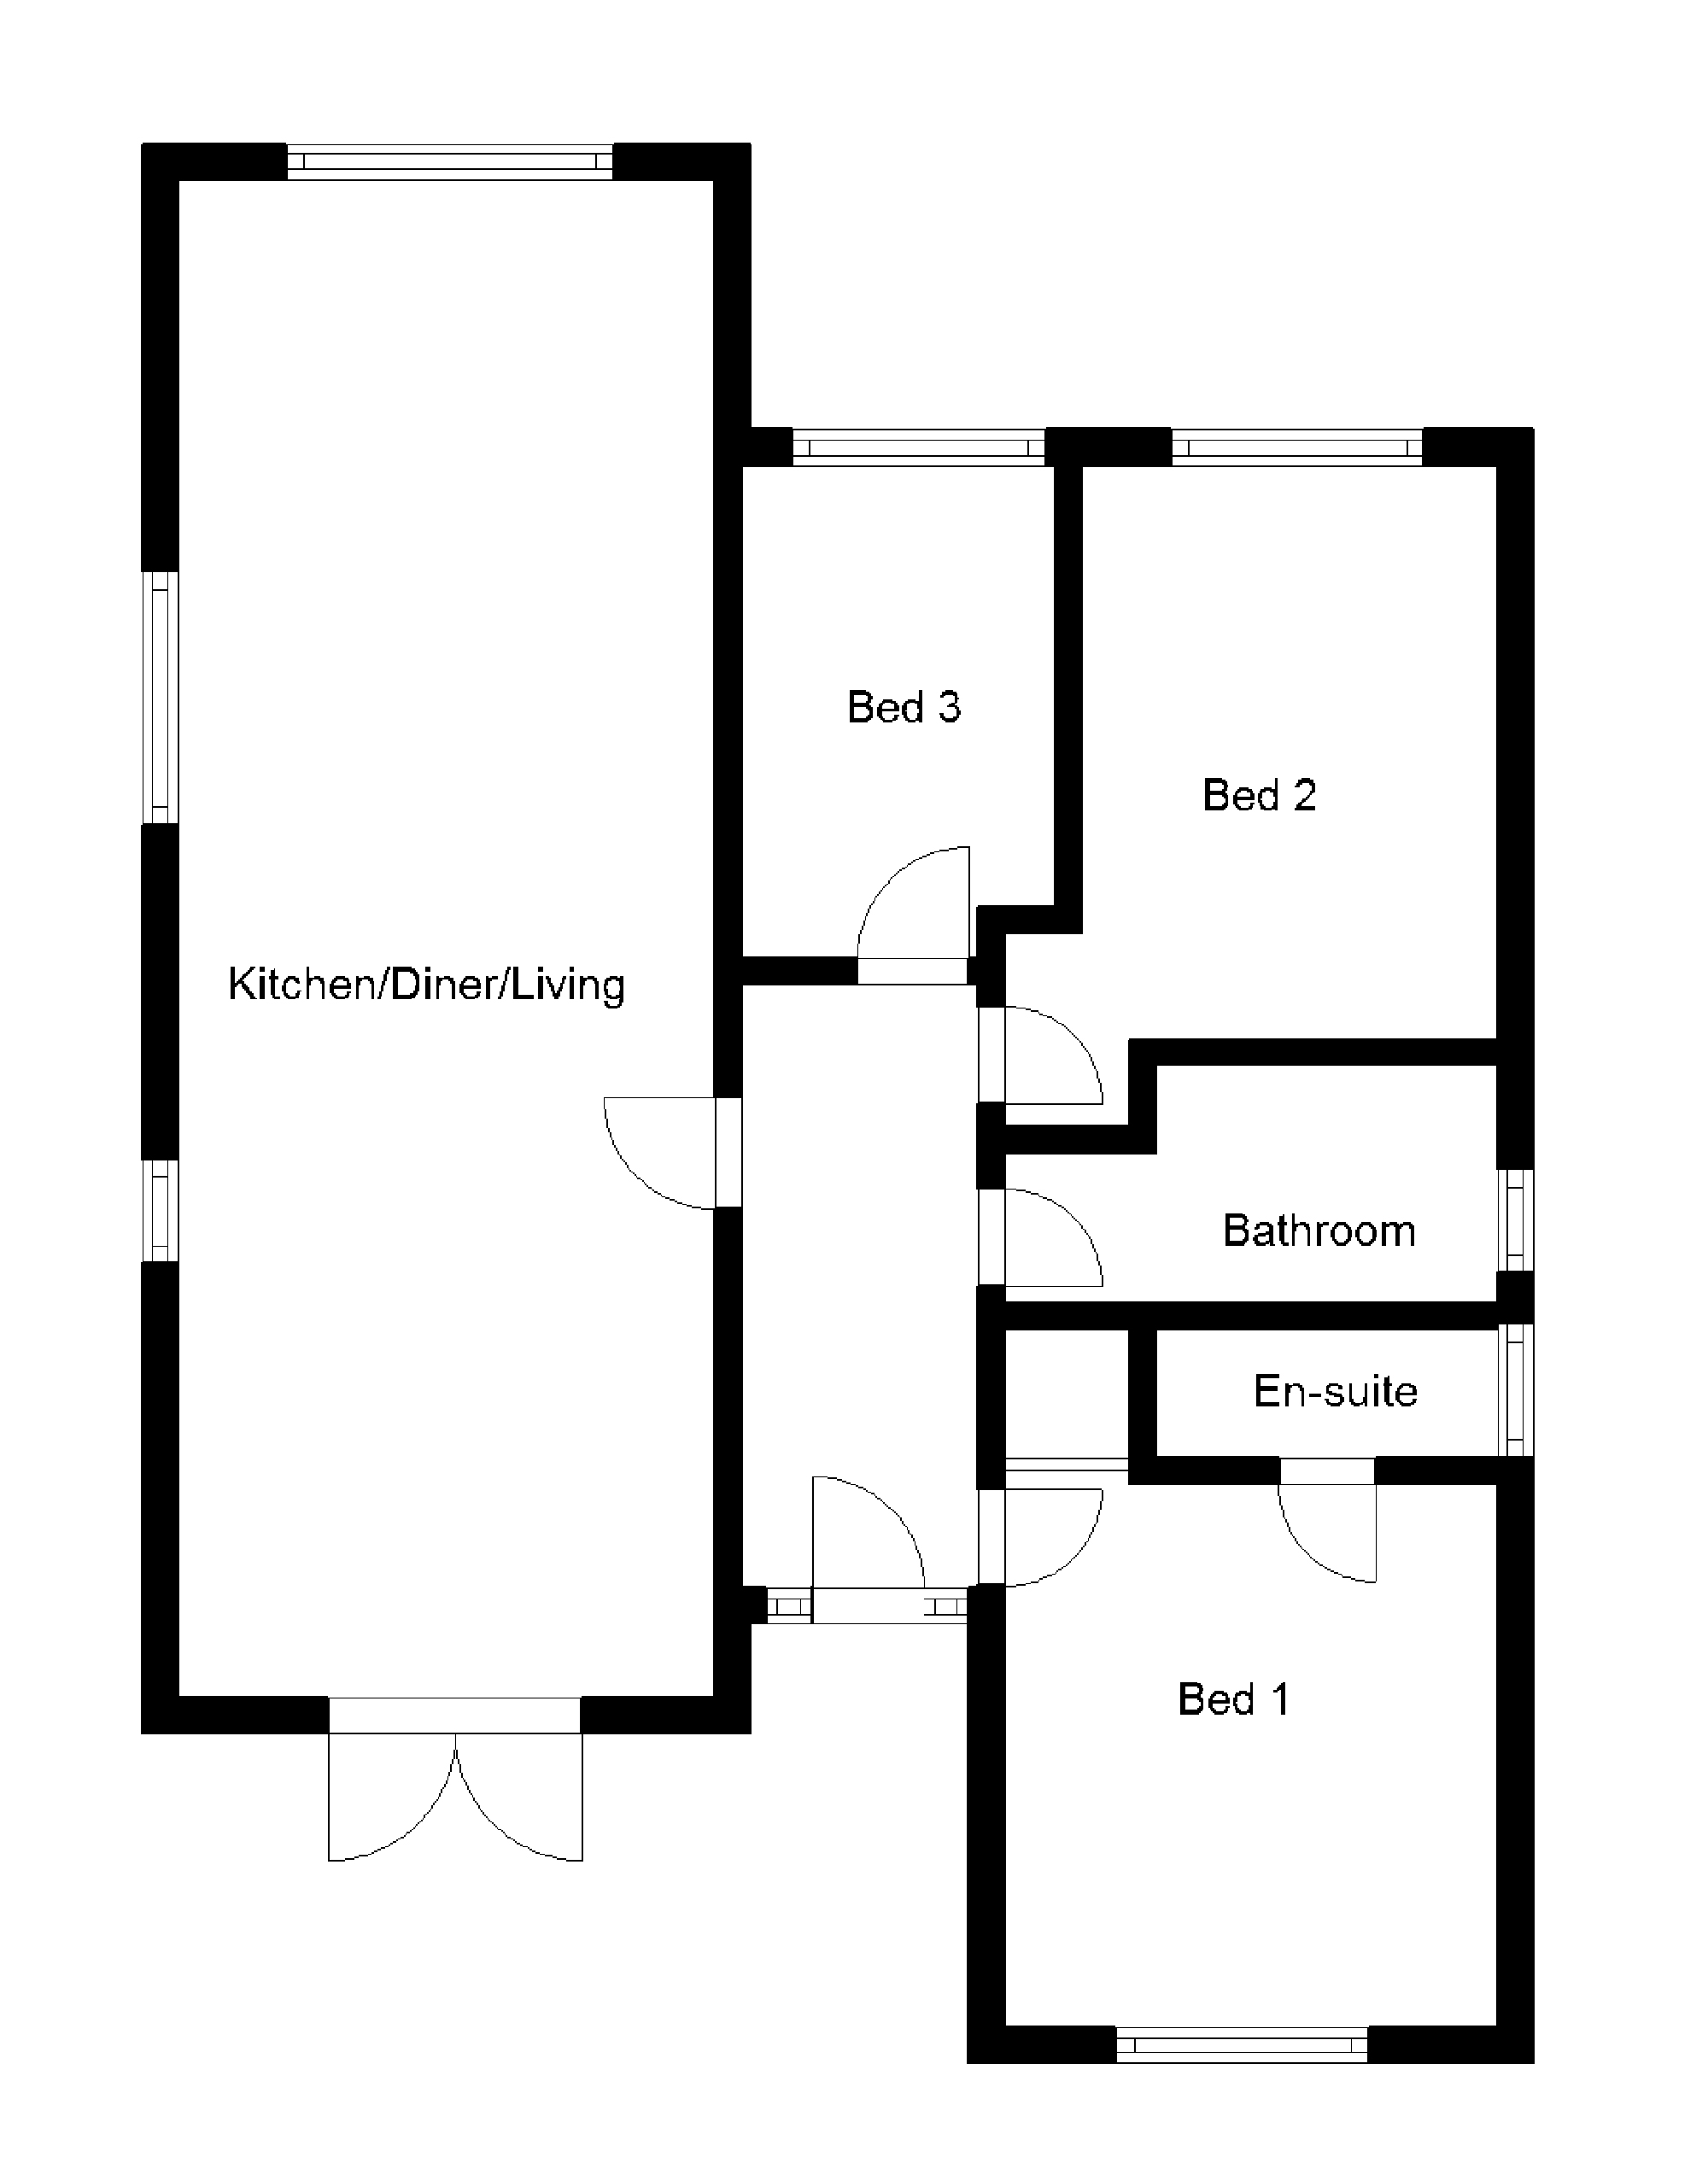 3 bedroom bungalow house plans